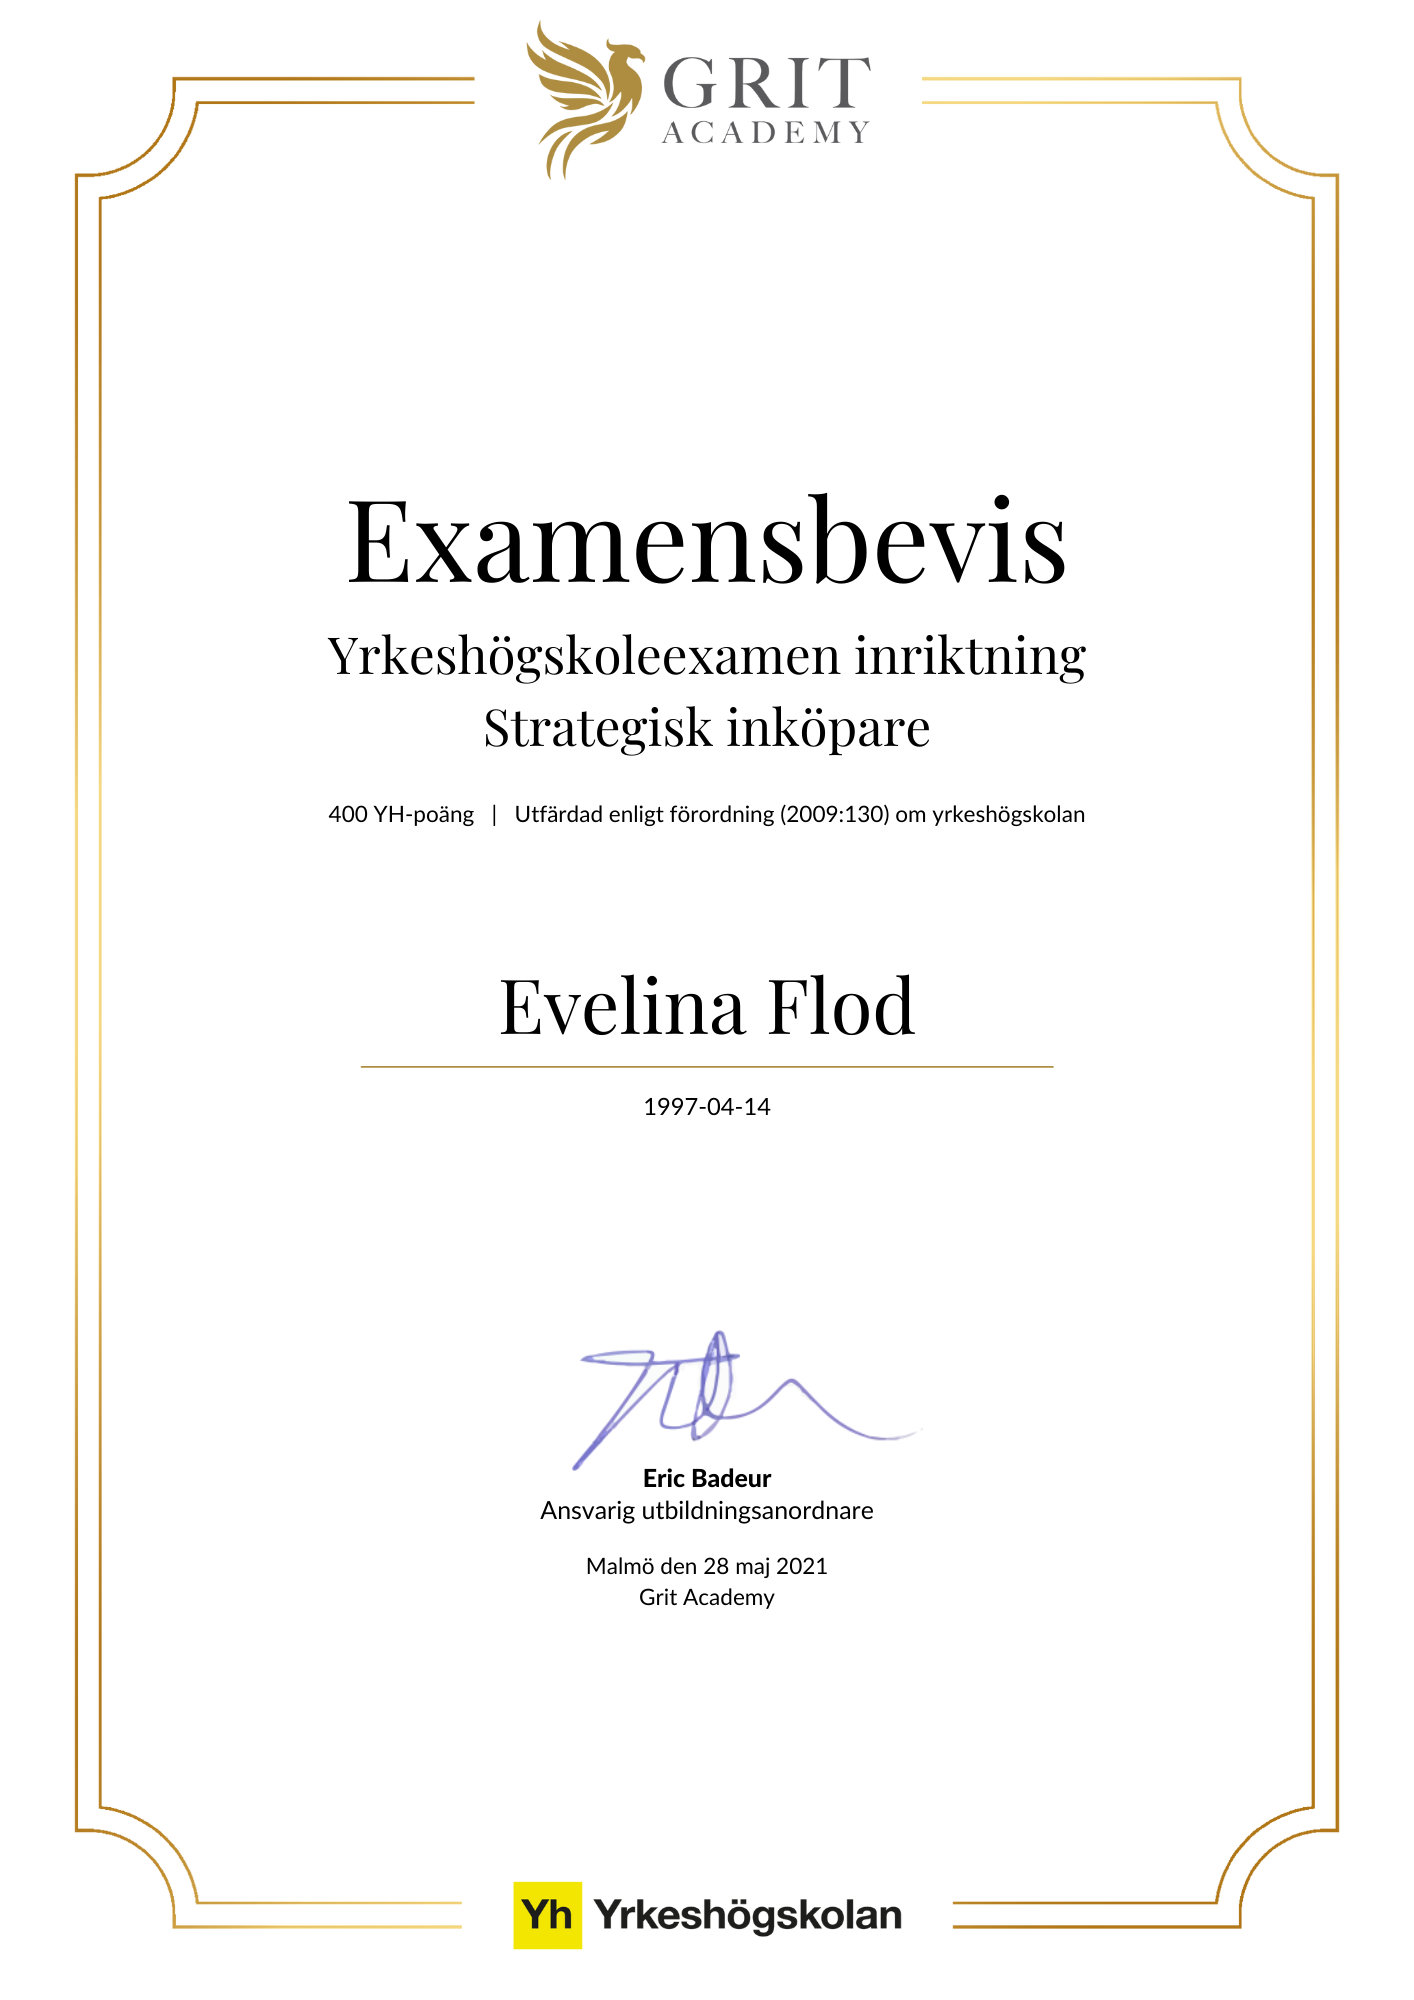 Examensbevis Evelina Flod - 1